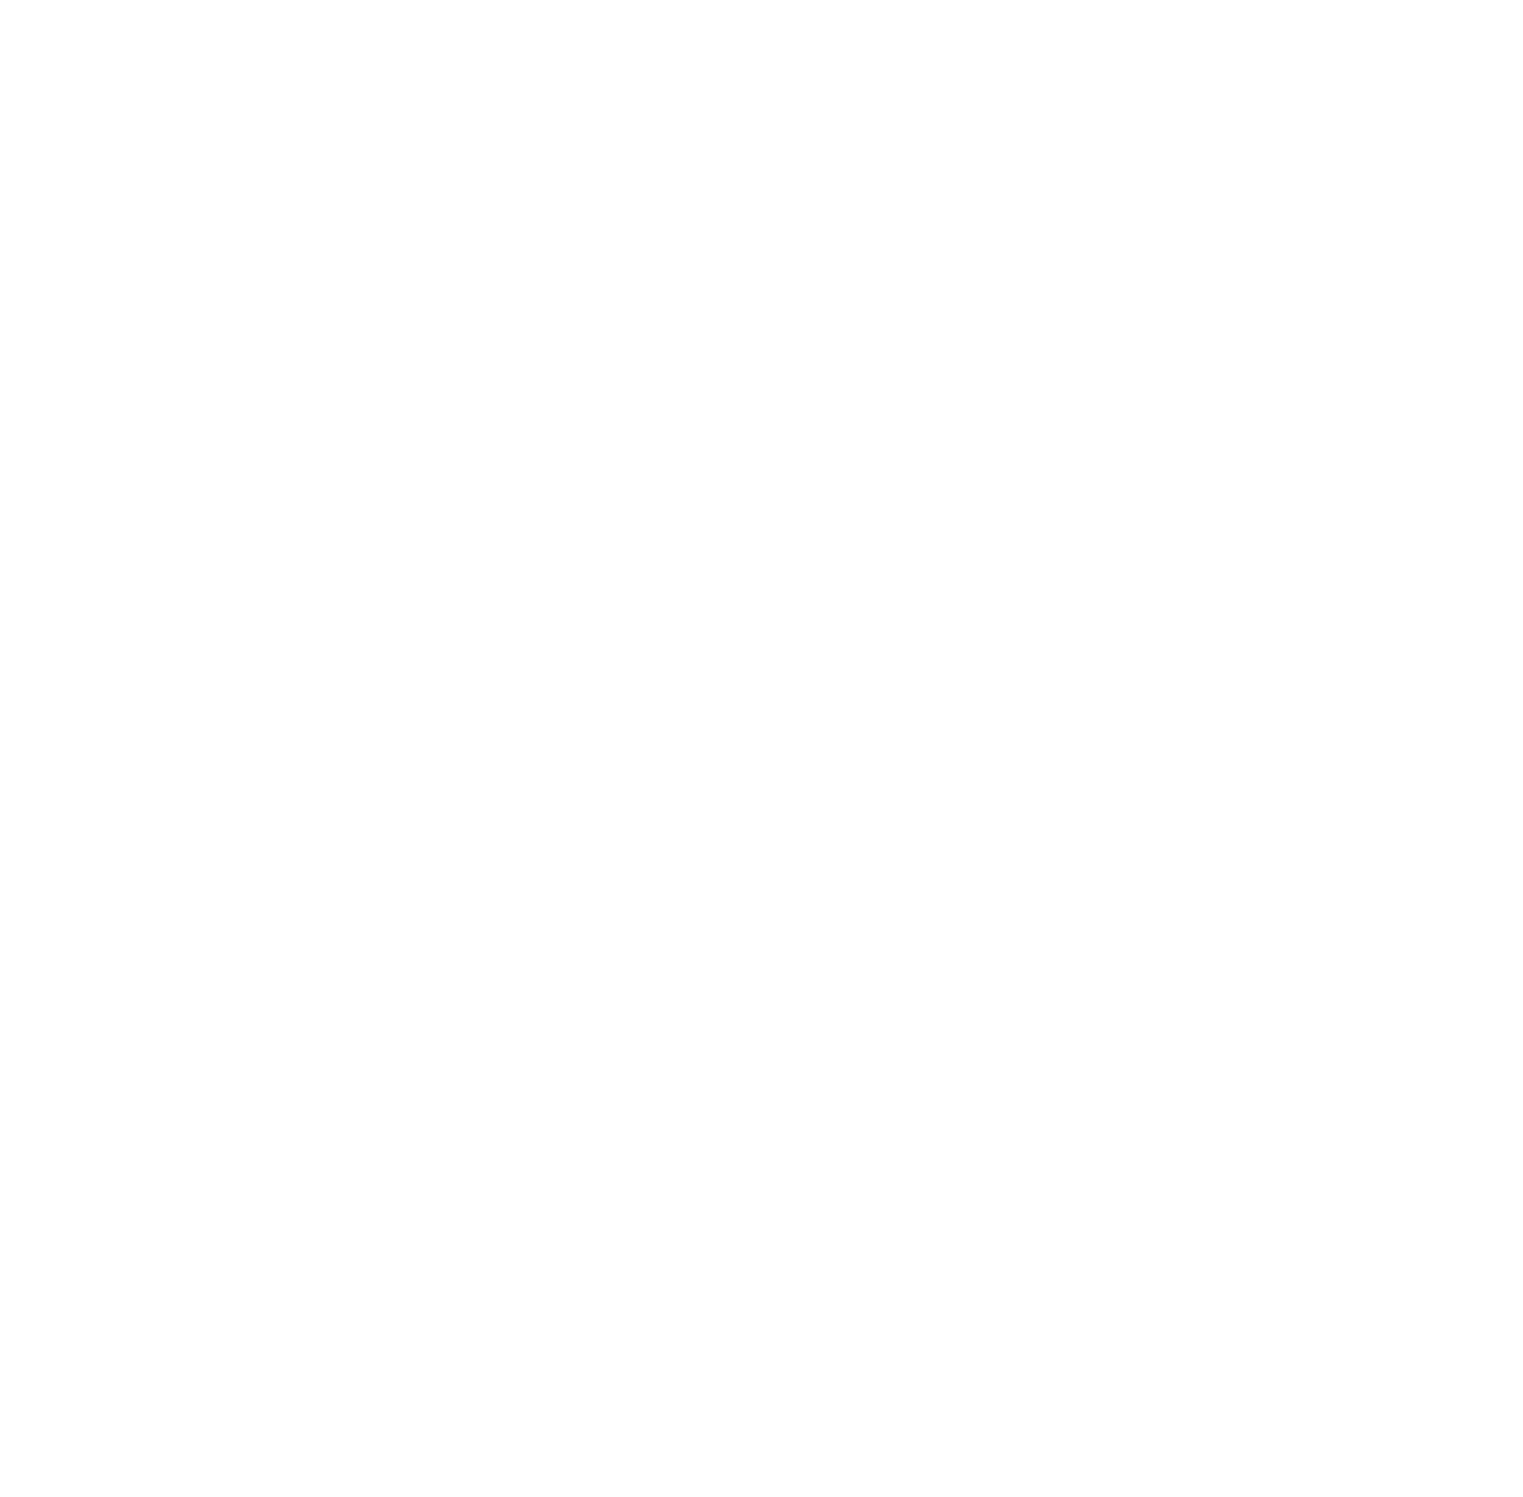 Ally

 logo for dark backgrounds (transparent PNG)